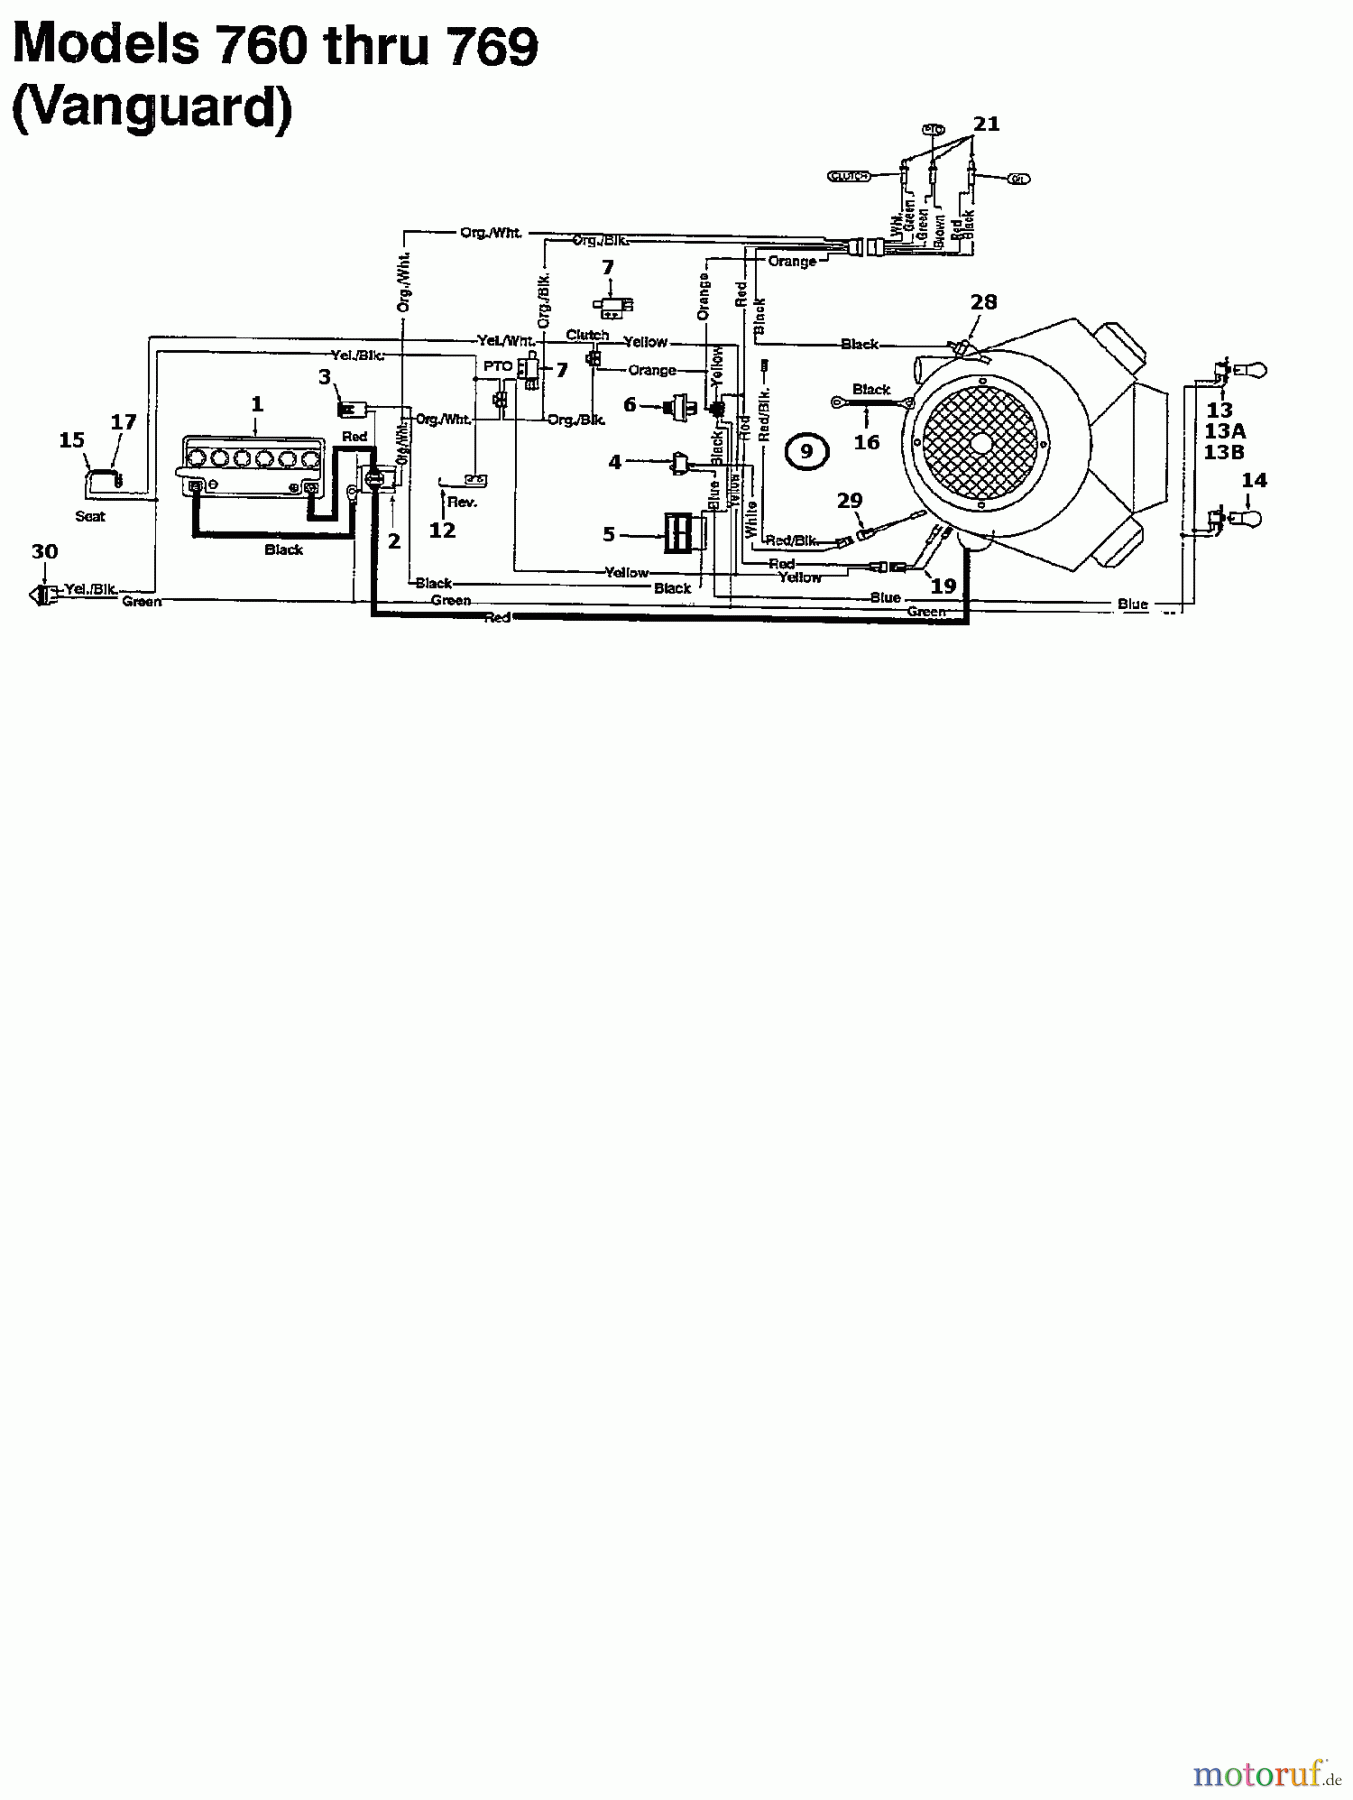  Raiffeisen Rasentraktoren RMH 13/102 135N765N628  (1995) Schaltplan Vanguard